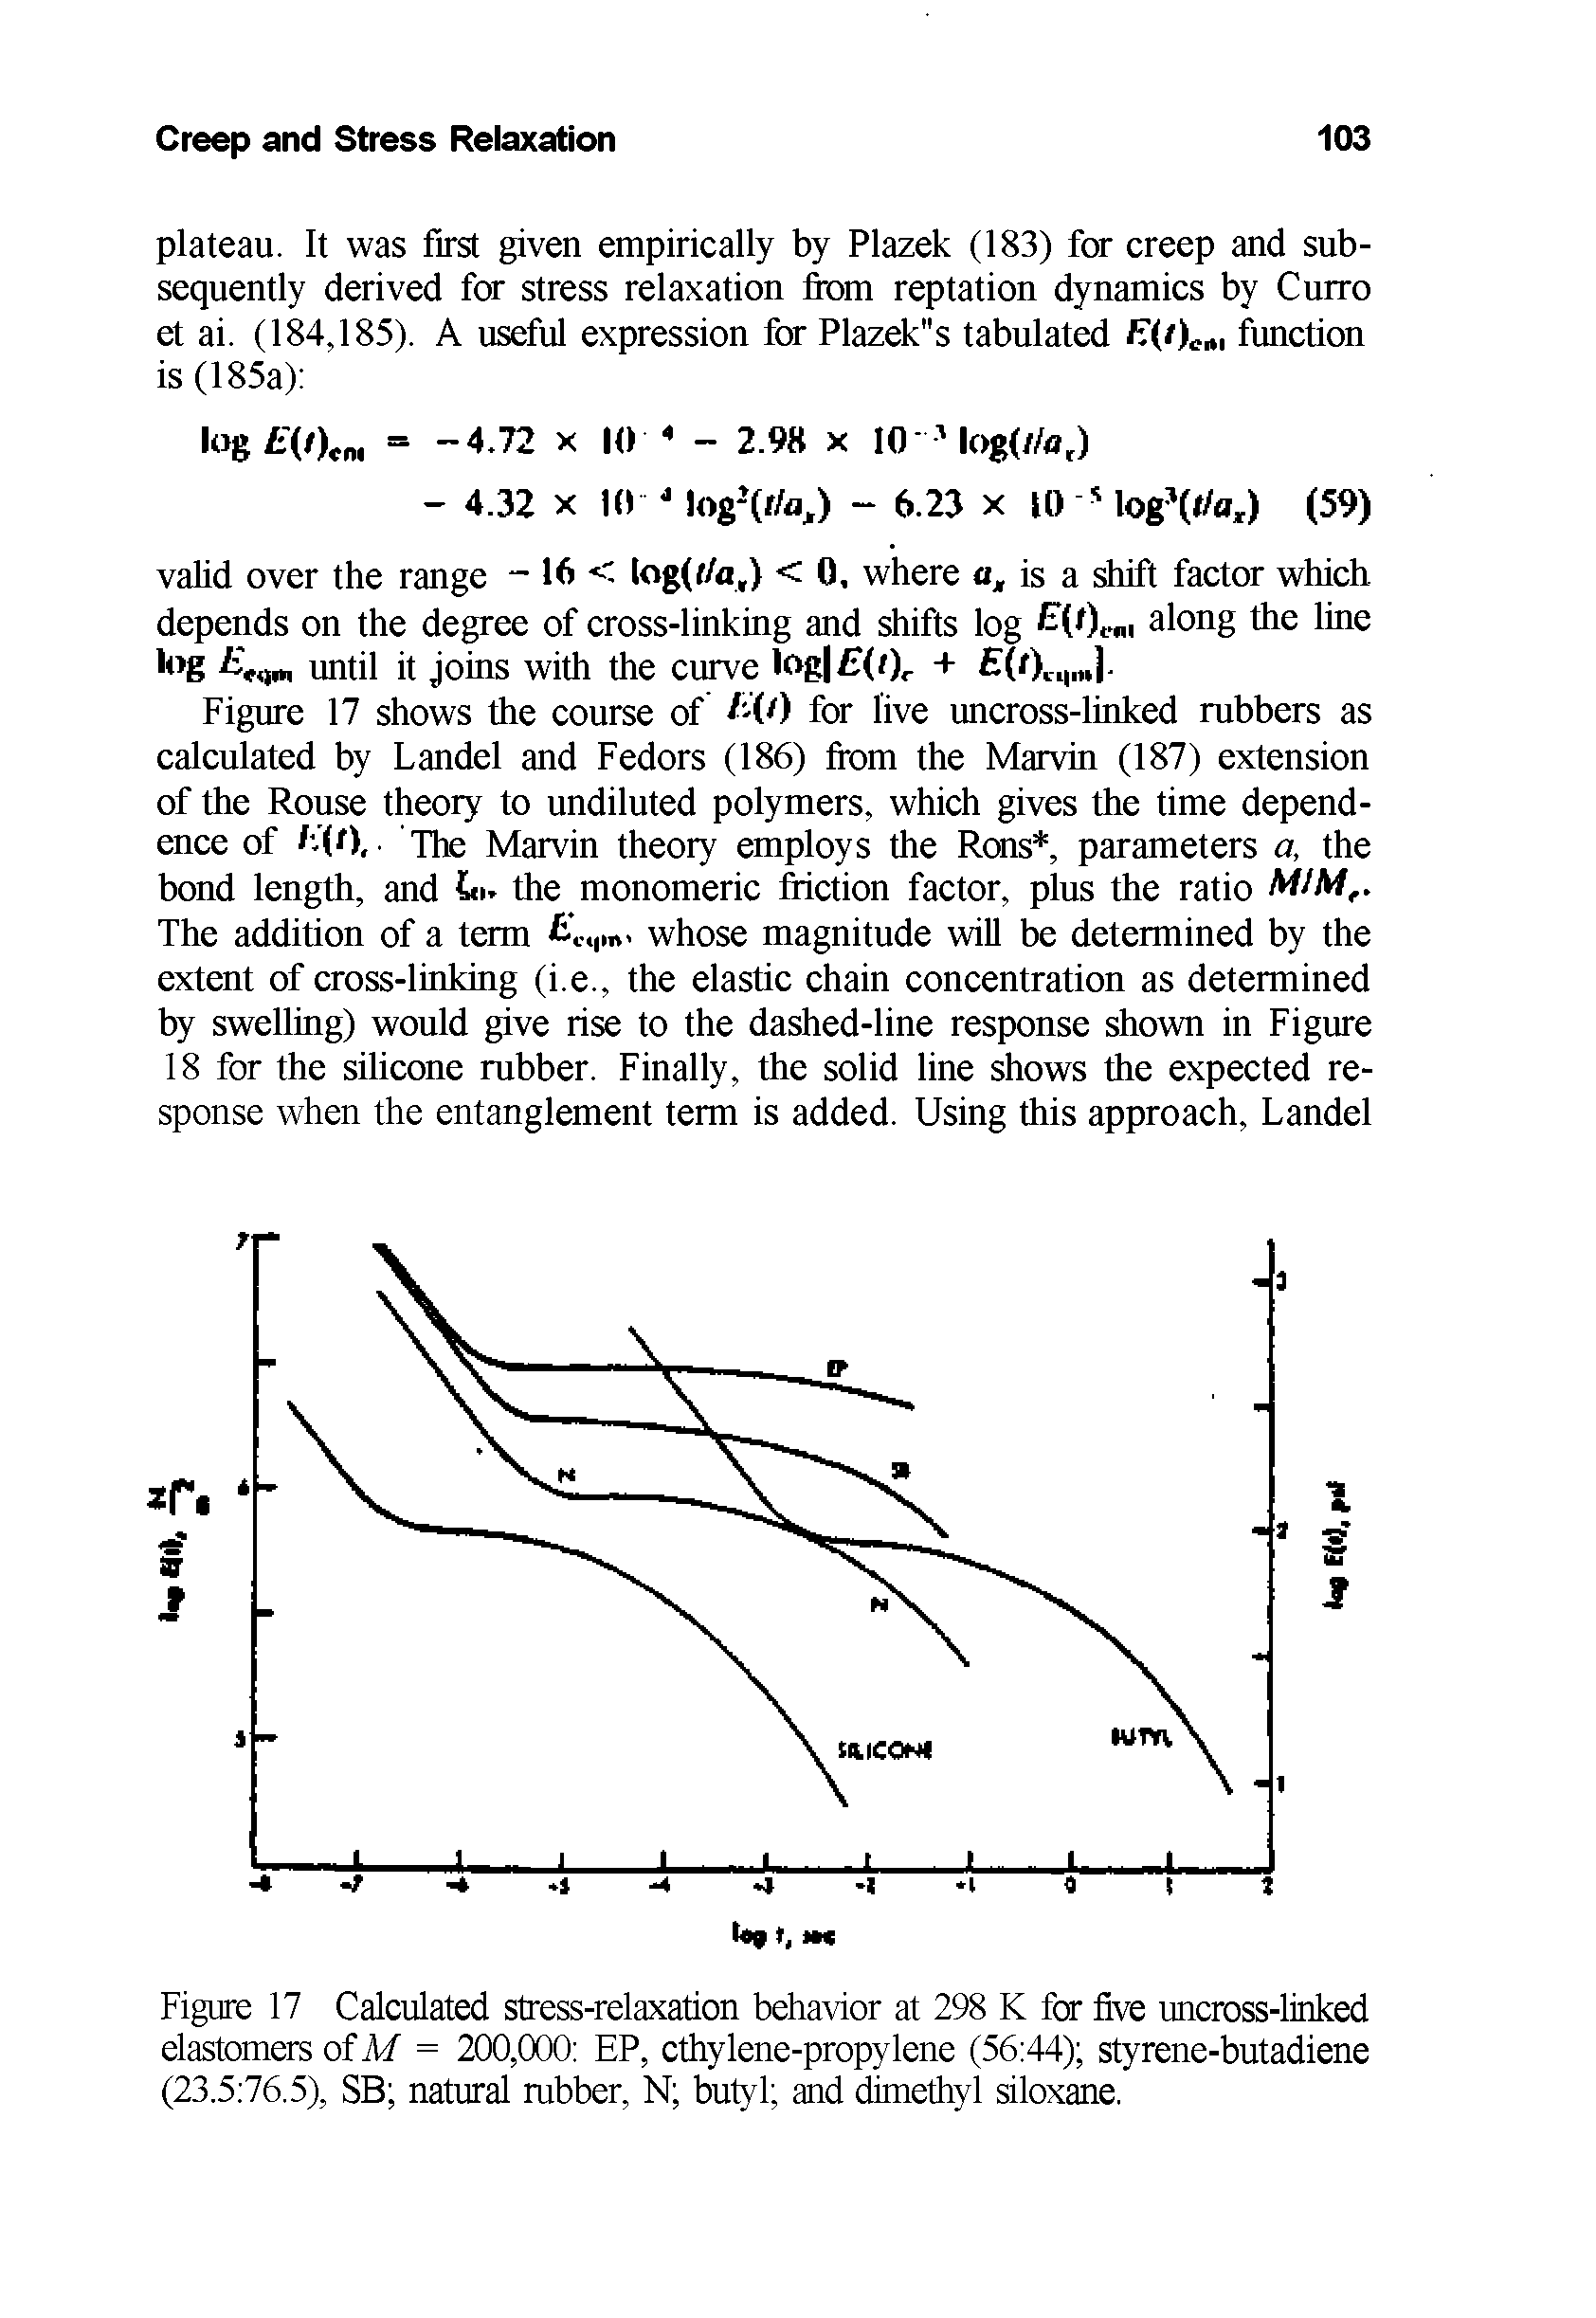 Figure 17 Calculated stress-relaxation behavior at 298 K for five uncross-linked elastomers of M = 200,000 EP, ethylene-propylene (56 44) styrene-butadiene (23.5 76.5), SB natural rubber, N butyl and dimethyl siloxane.